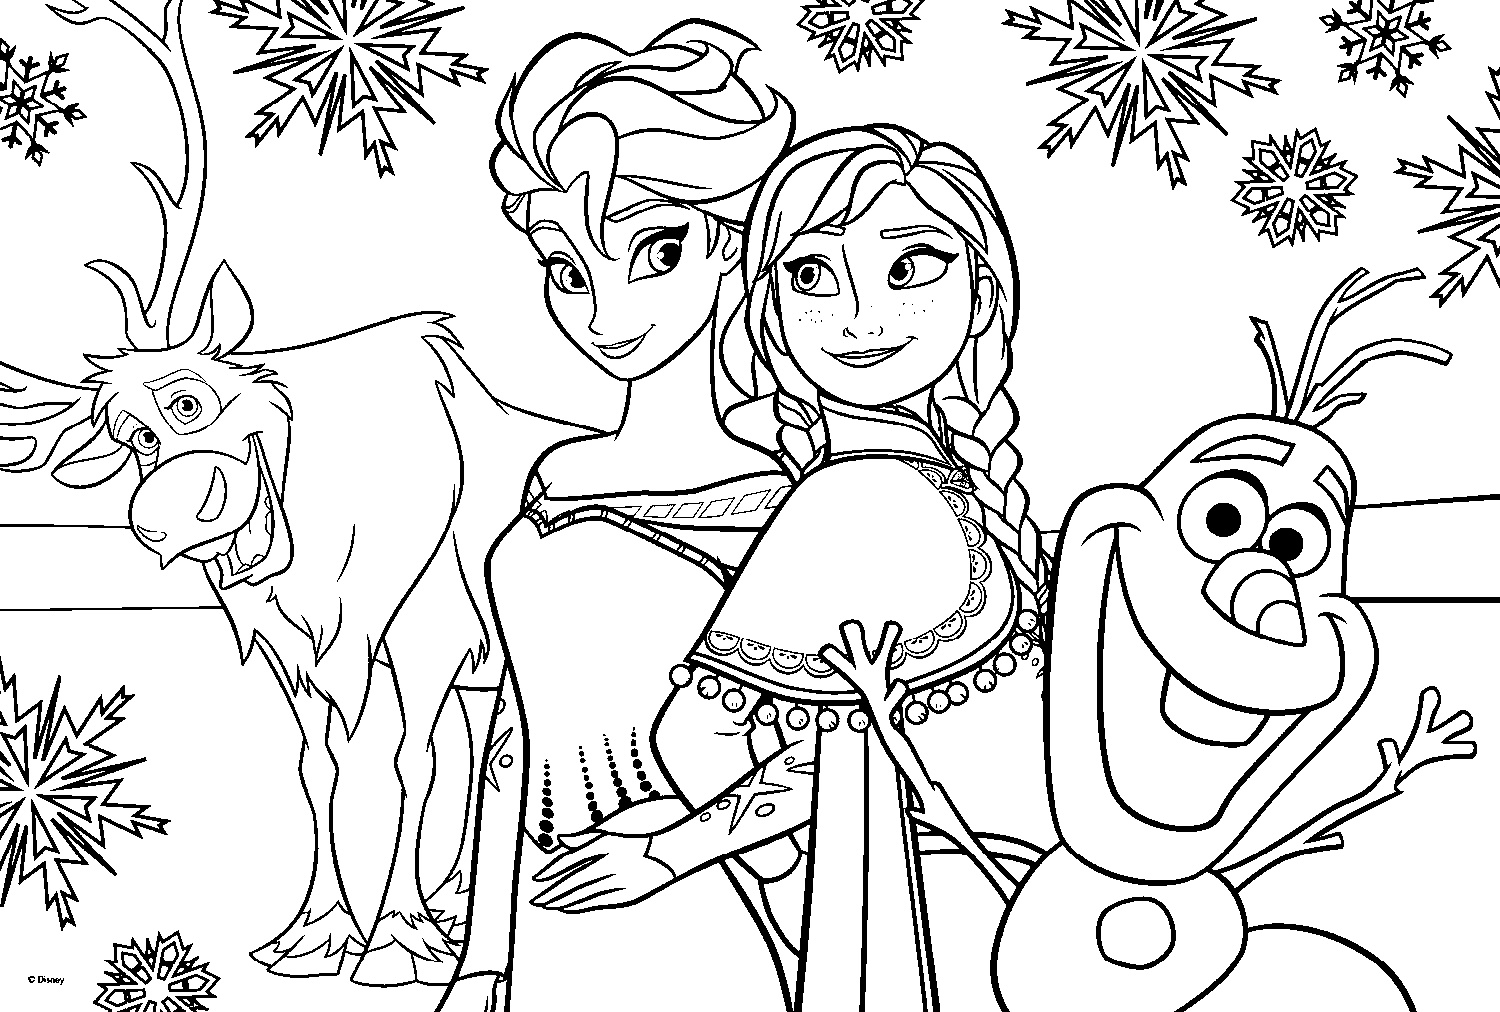 Download 18 Frozen Printable Coloring Pages: Anna & Elsa - Print ...